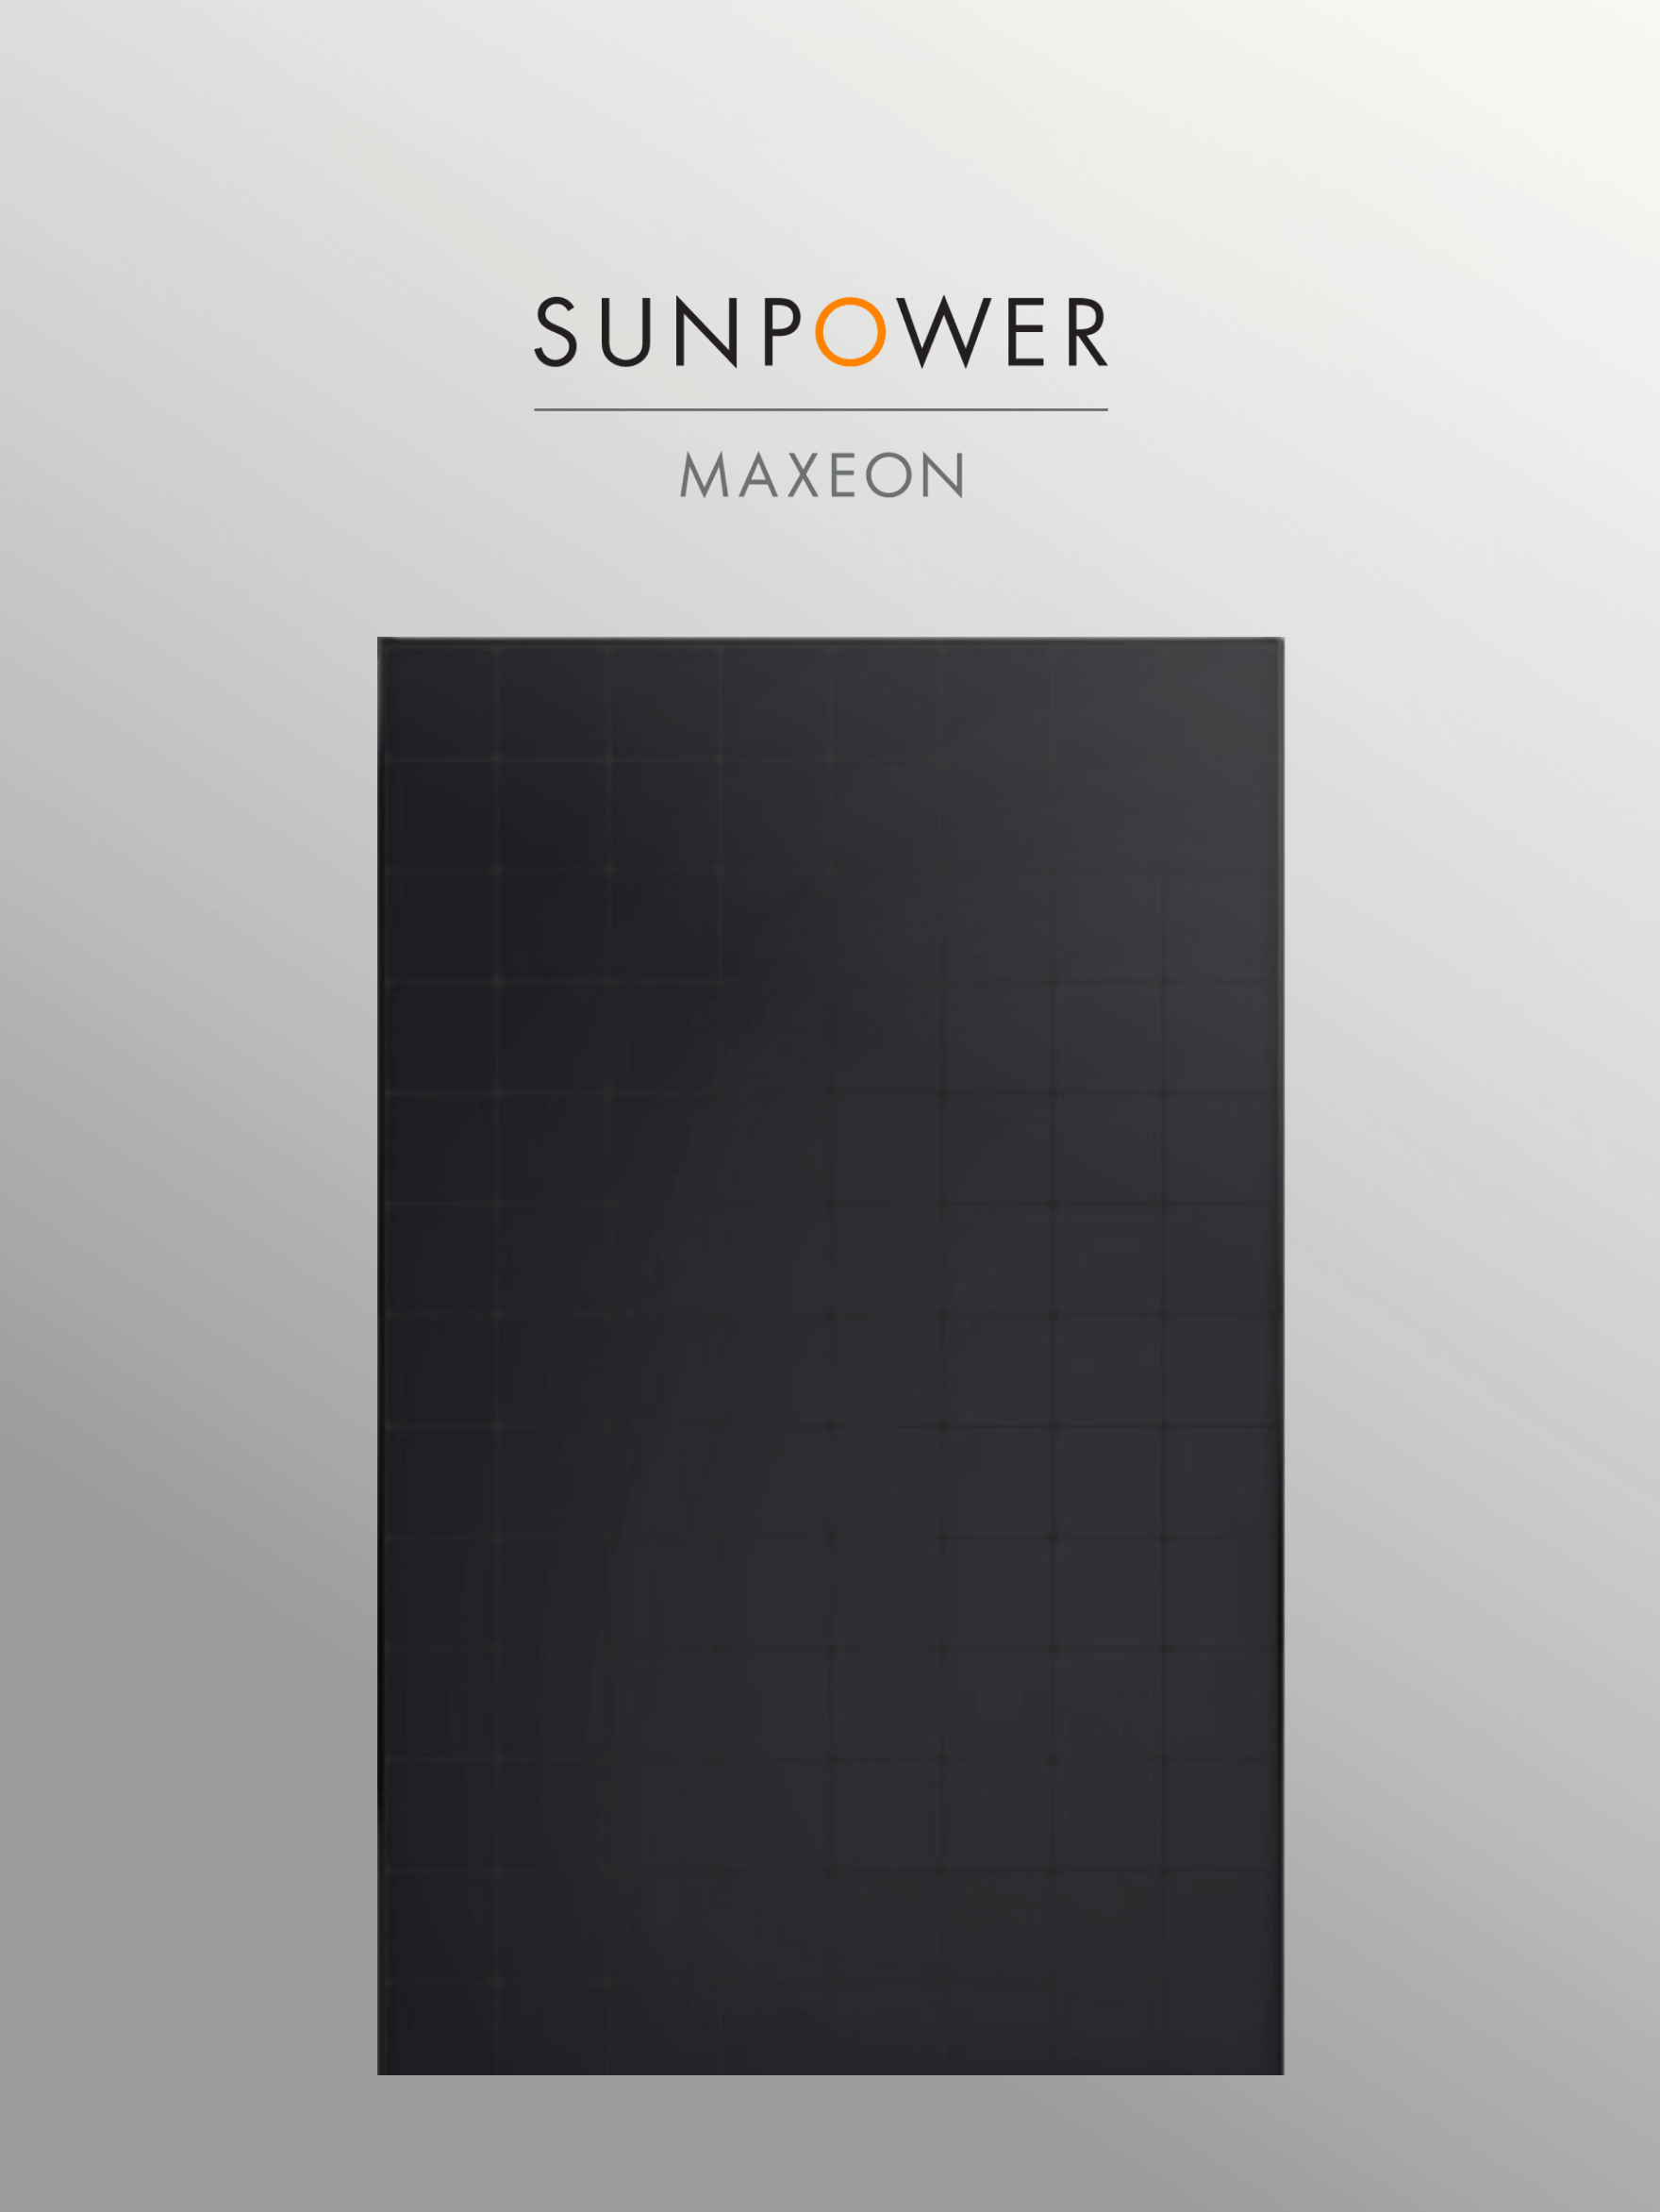 Sunpower maxeon 3 solcellepanel fra 1KOMMA5